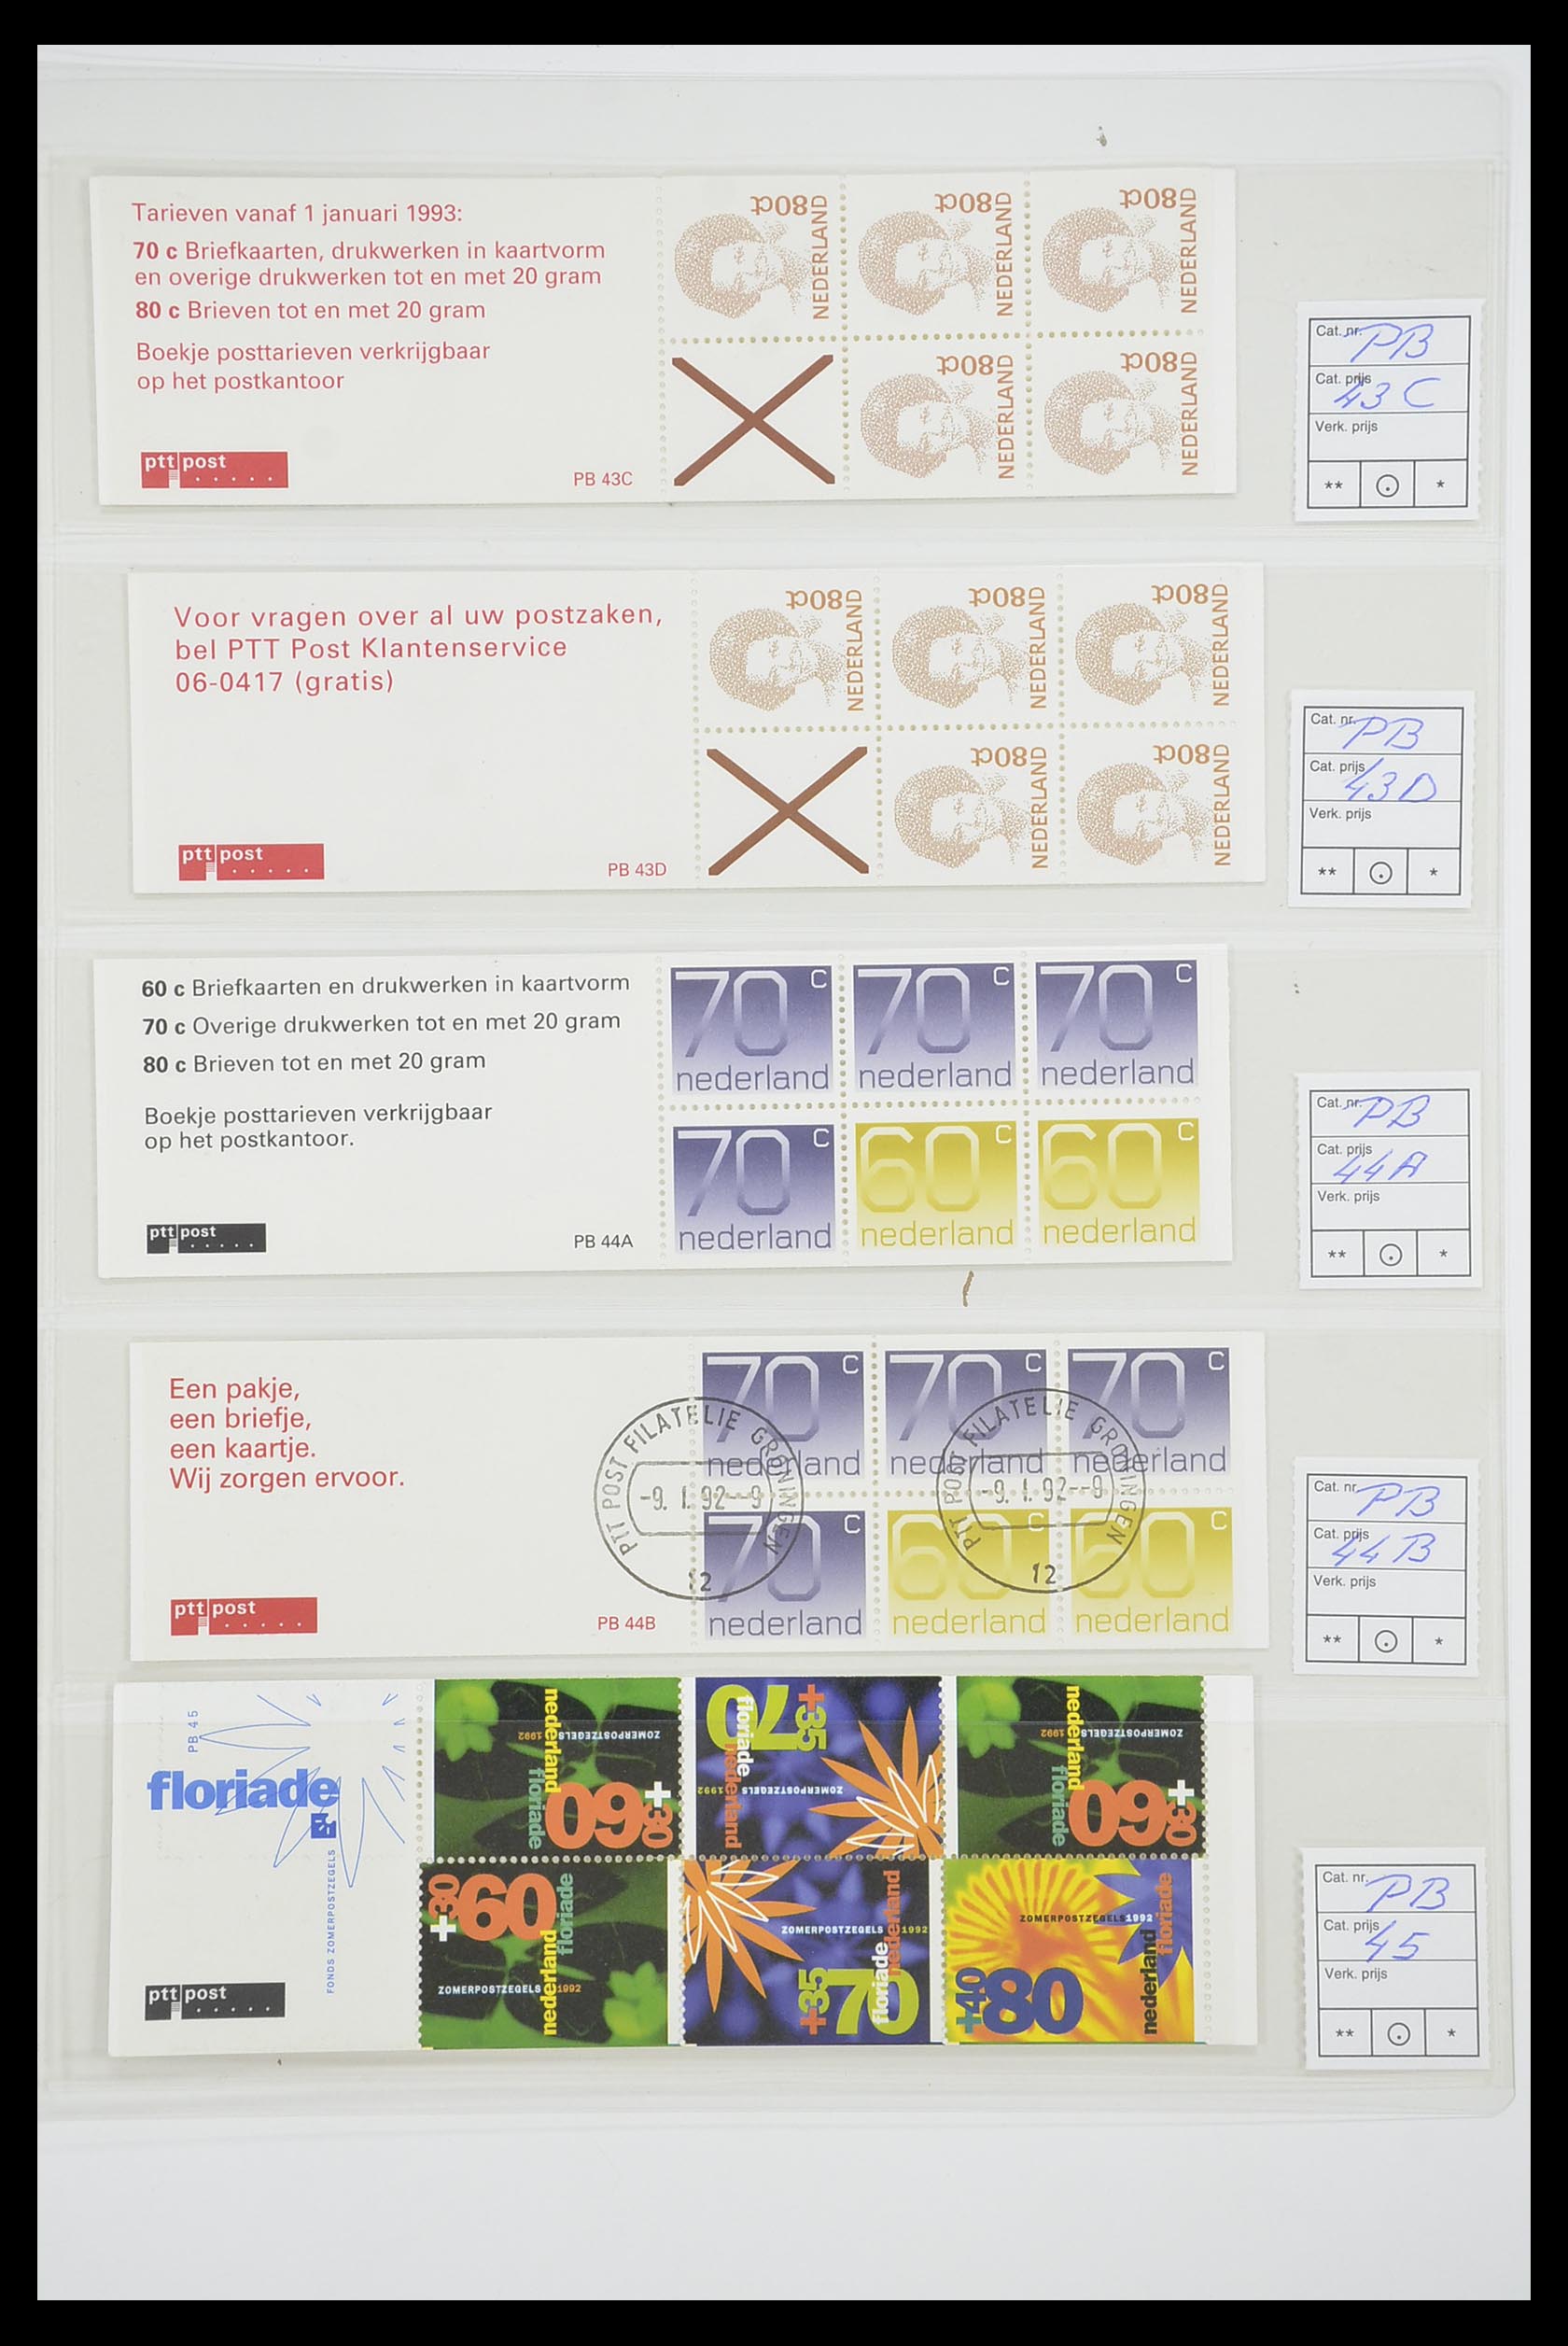 33815 069 - Stamp collection 33815 Netherlands stamp booklets 1964-2001.